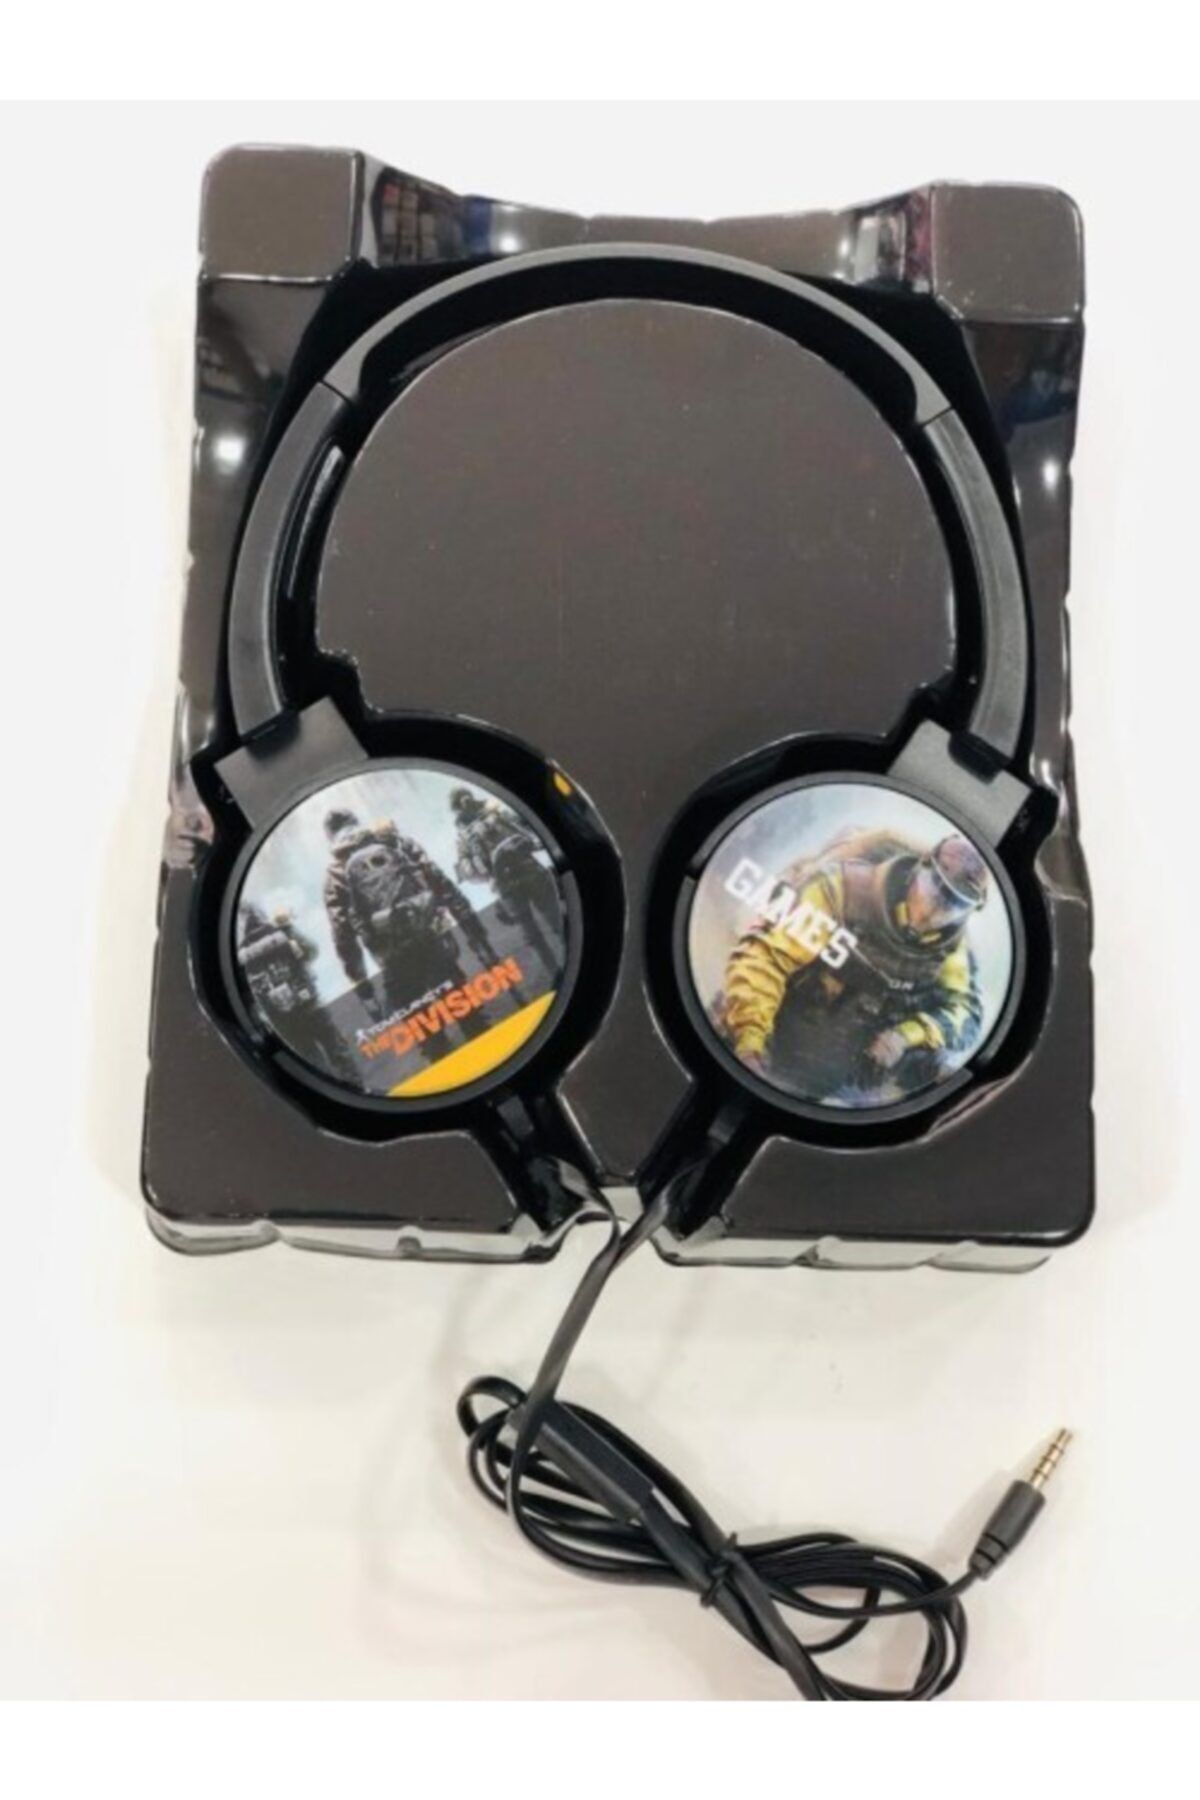 SKY AKSESUAR Games Headset Oyuncu Kulaklığı Ev-019